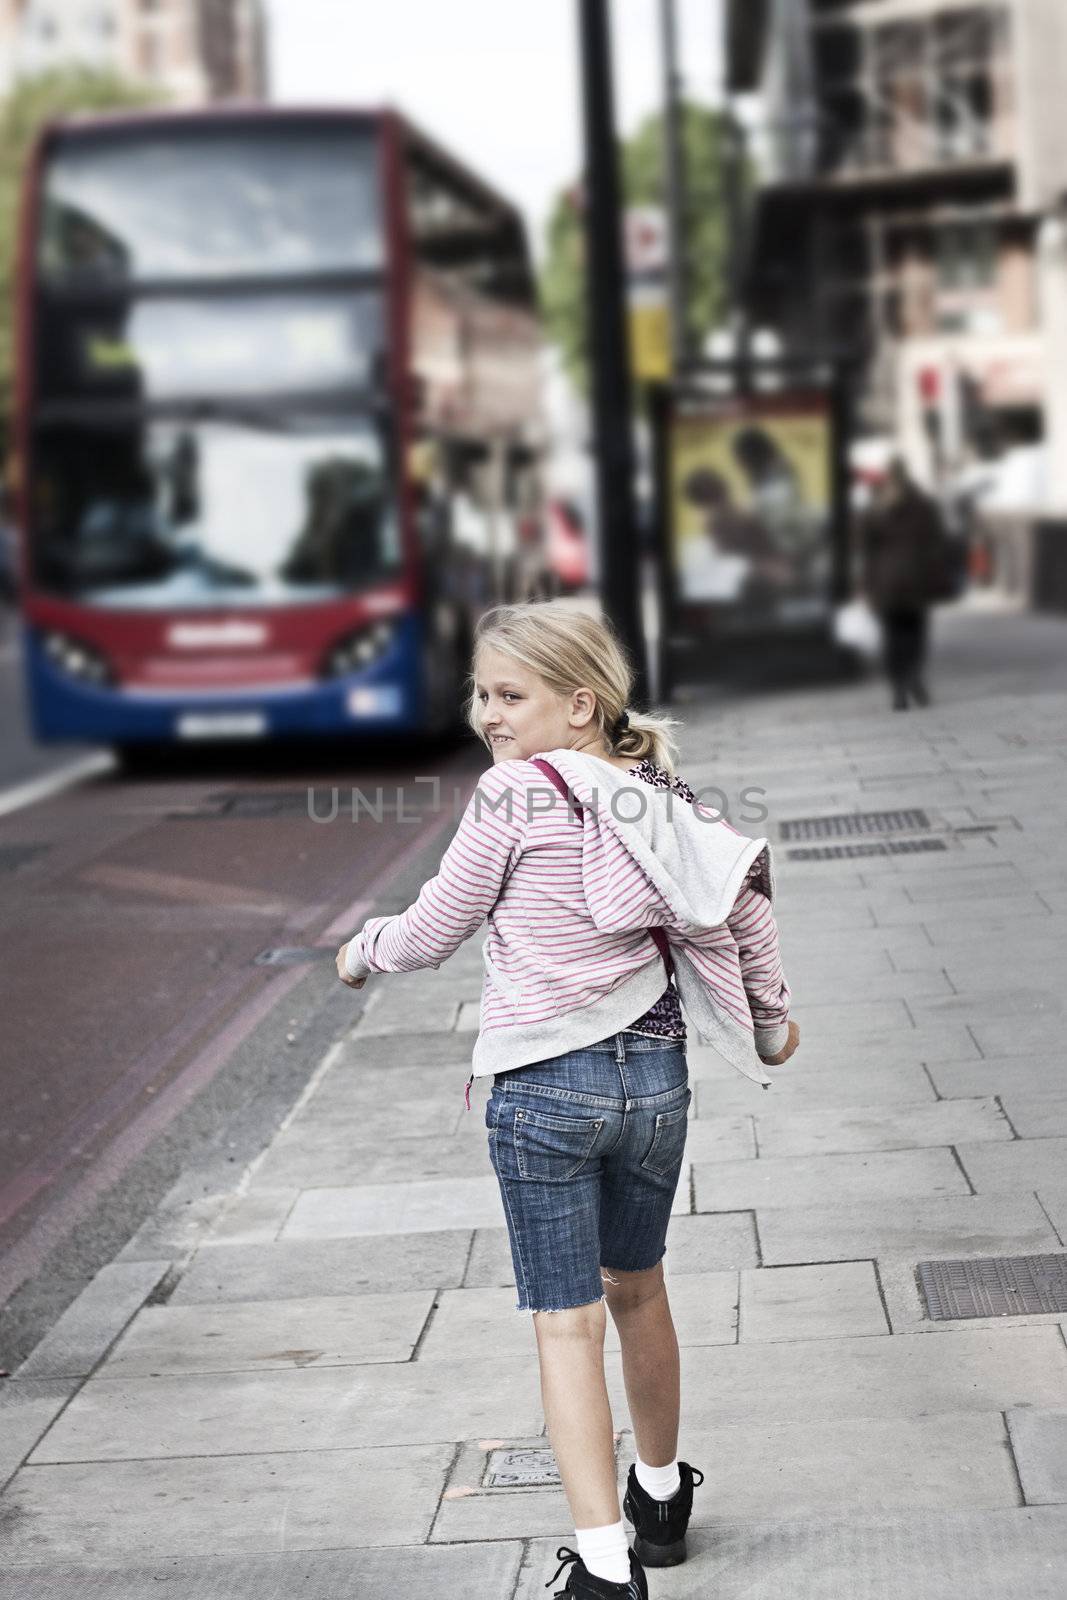 Child on city street by annems